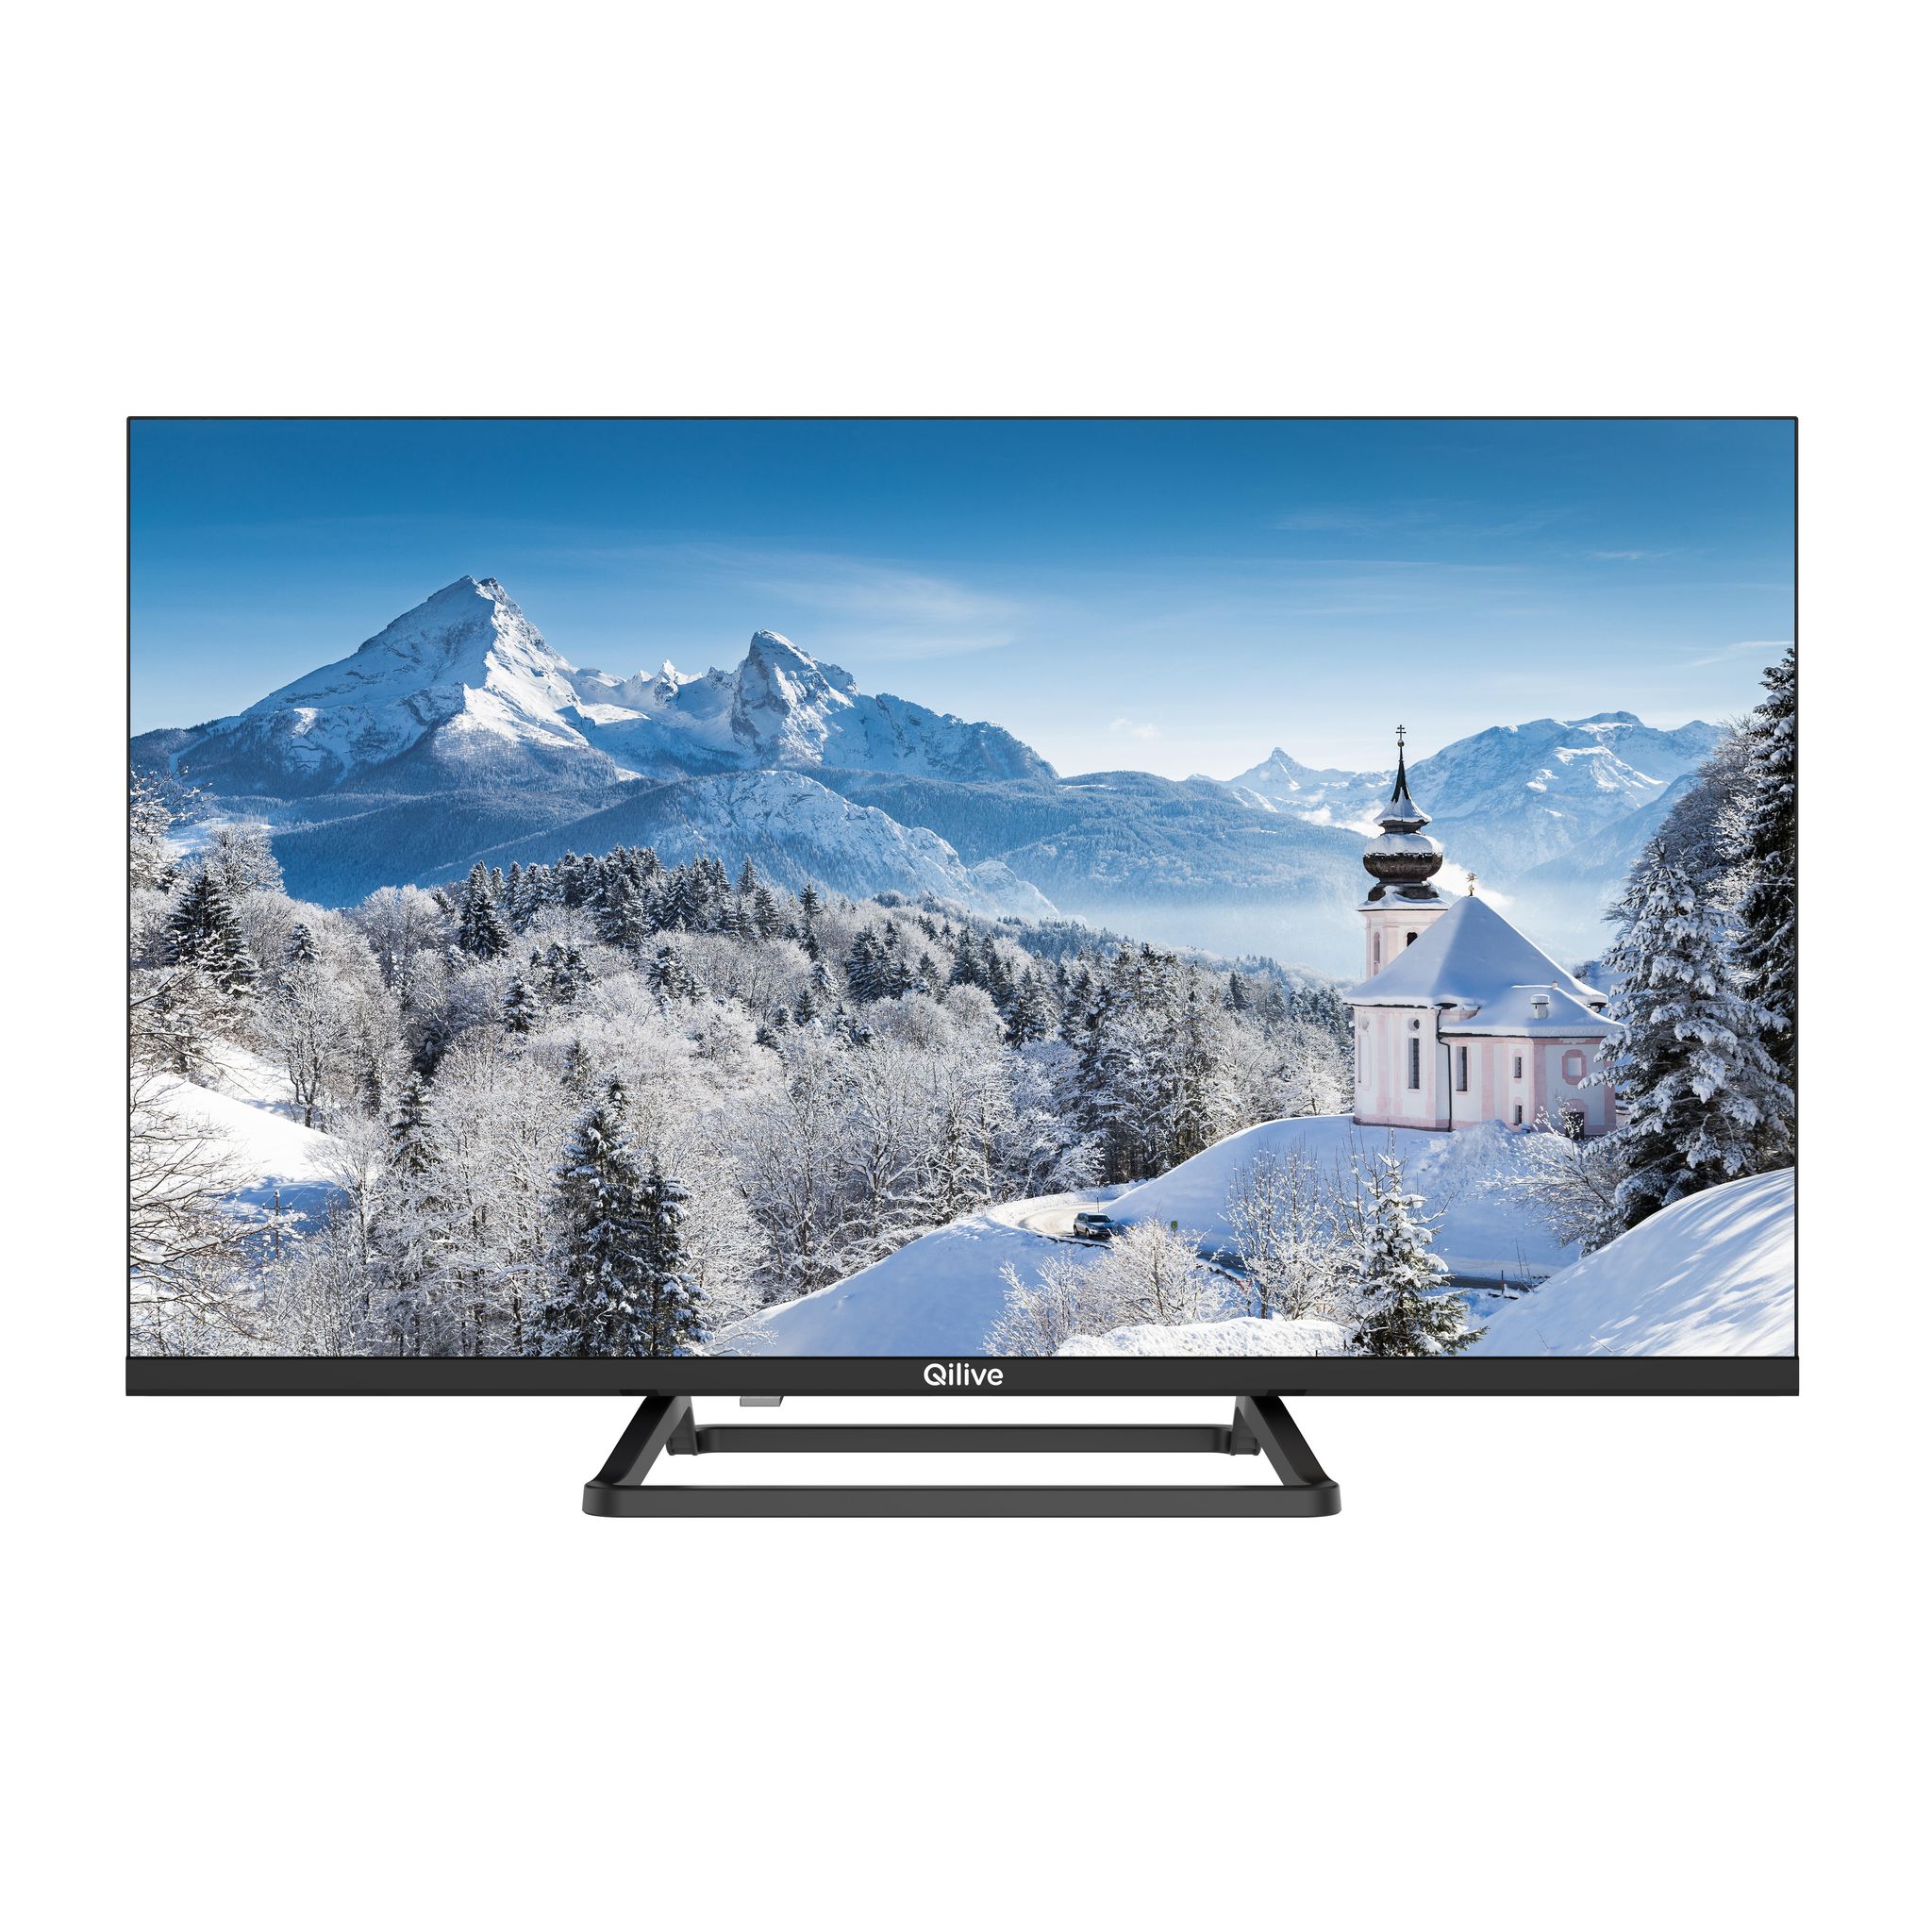 QILIVE Q32HA231B TV D-LED HD 80 cm Android TV pas cher 